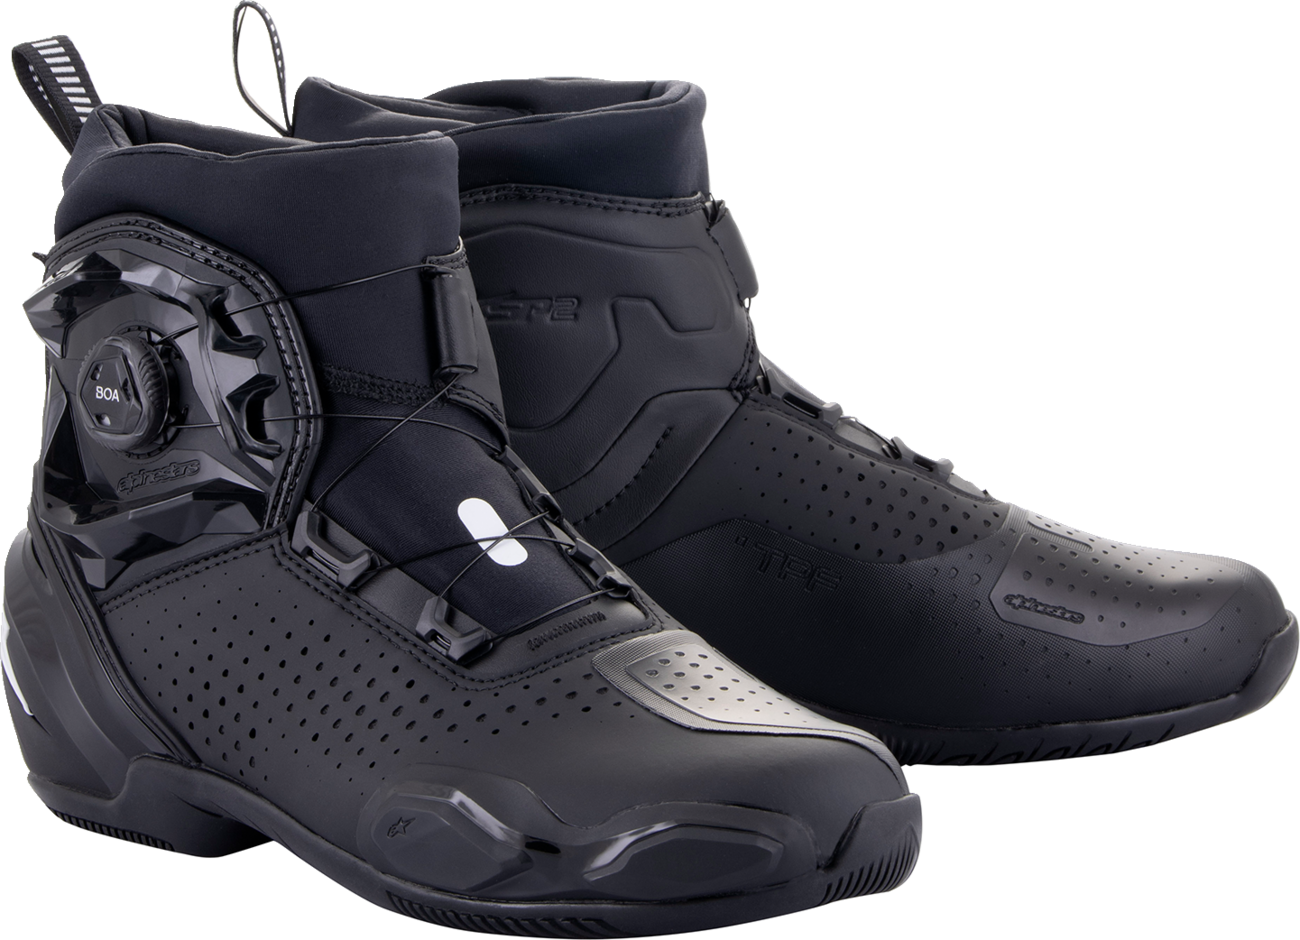 ALPINESTARS SP-2 Shoes - Black - US 6.5 / EU 40 2511622-10-40